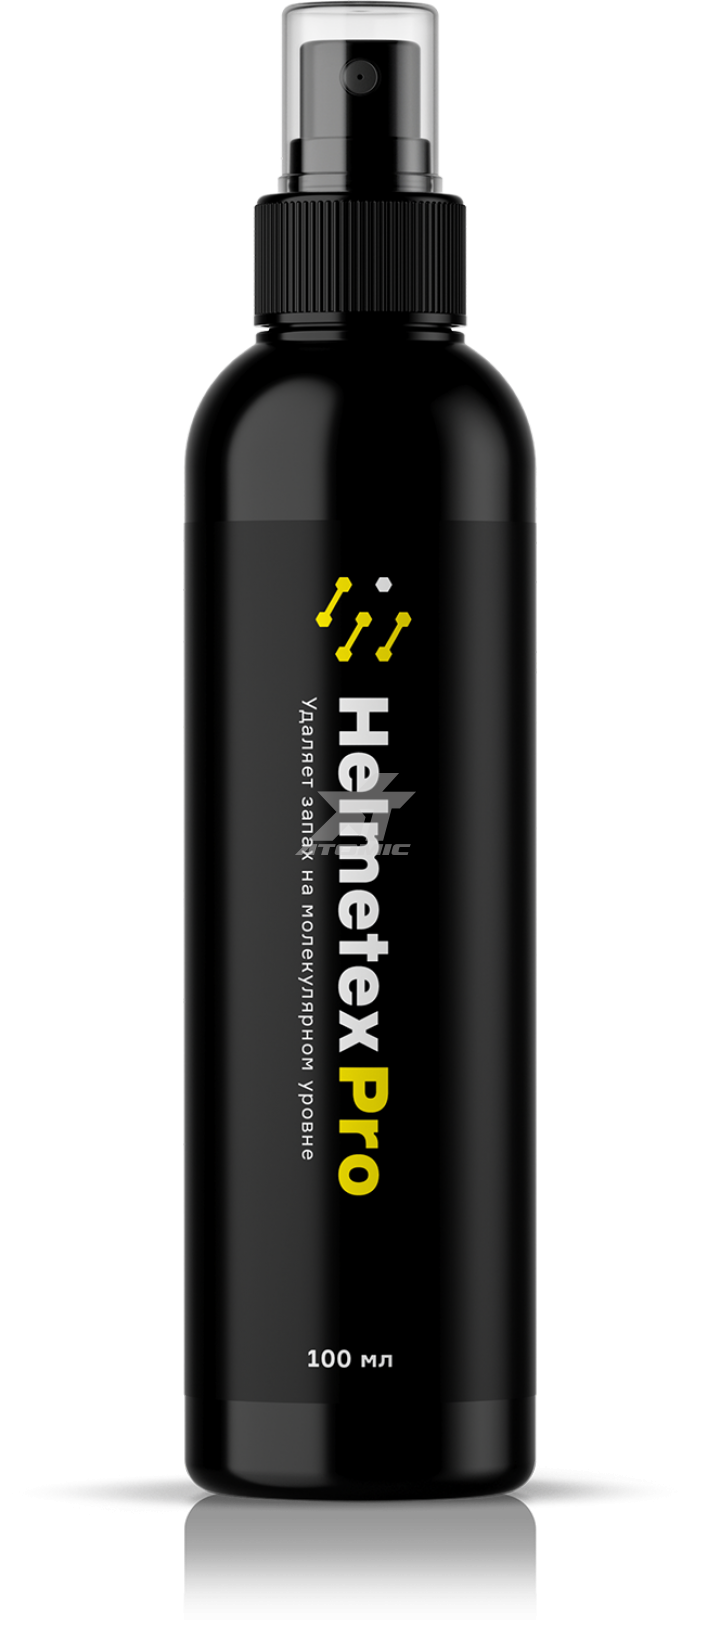 HELMETEX hel111 Антисептик и нейтрализатор запаха Pro для шлемов 100 мл